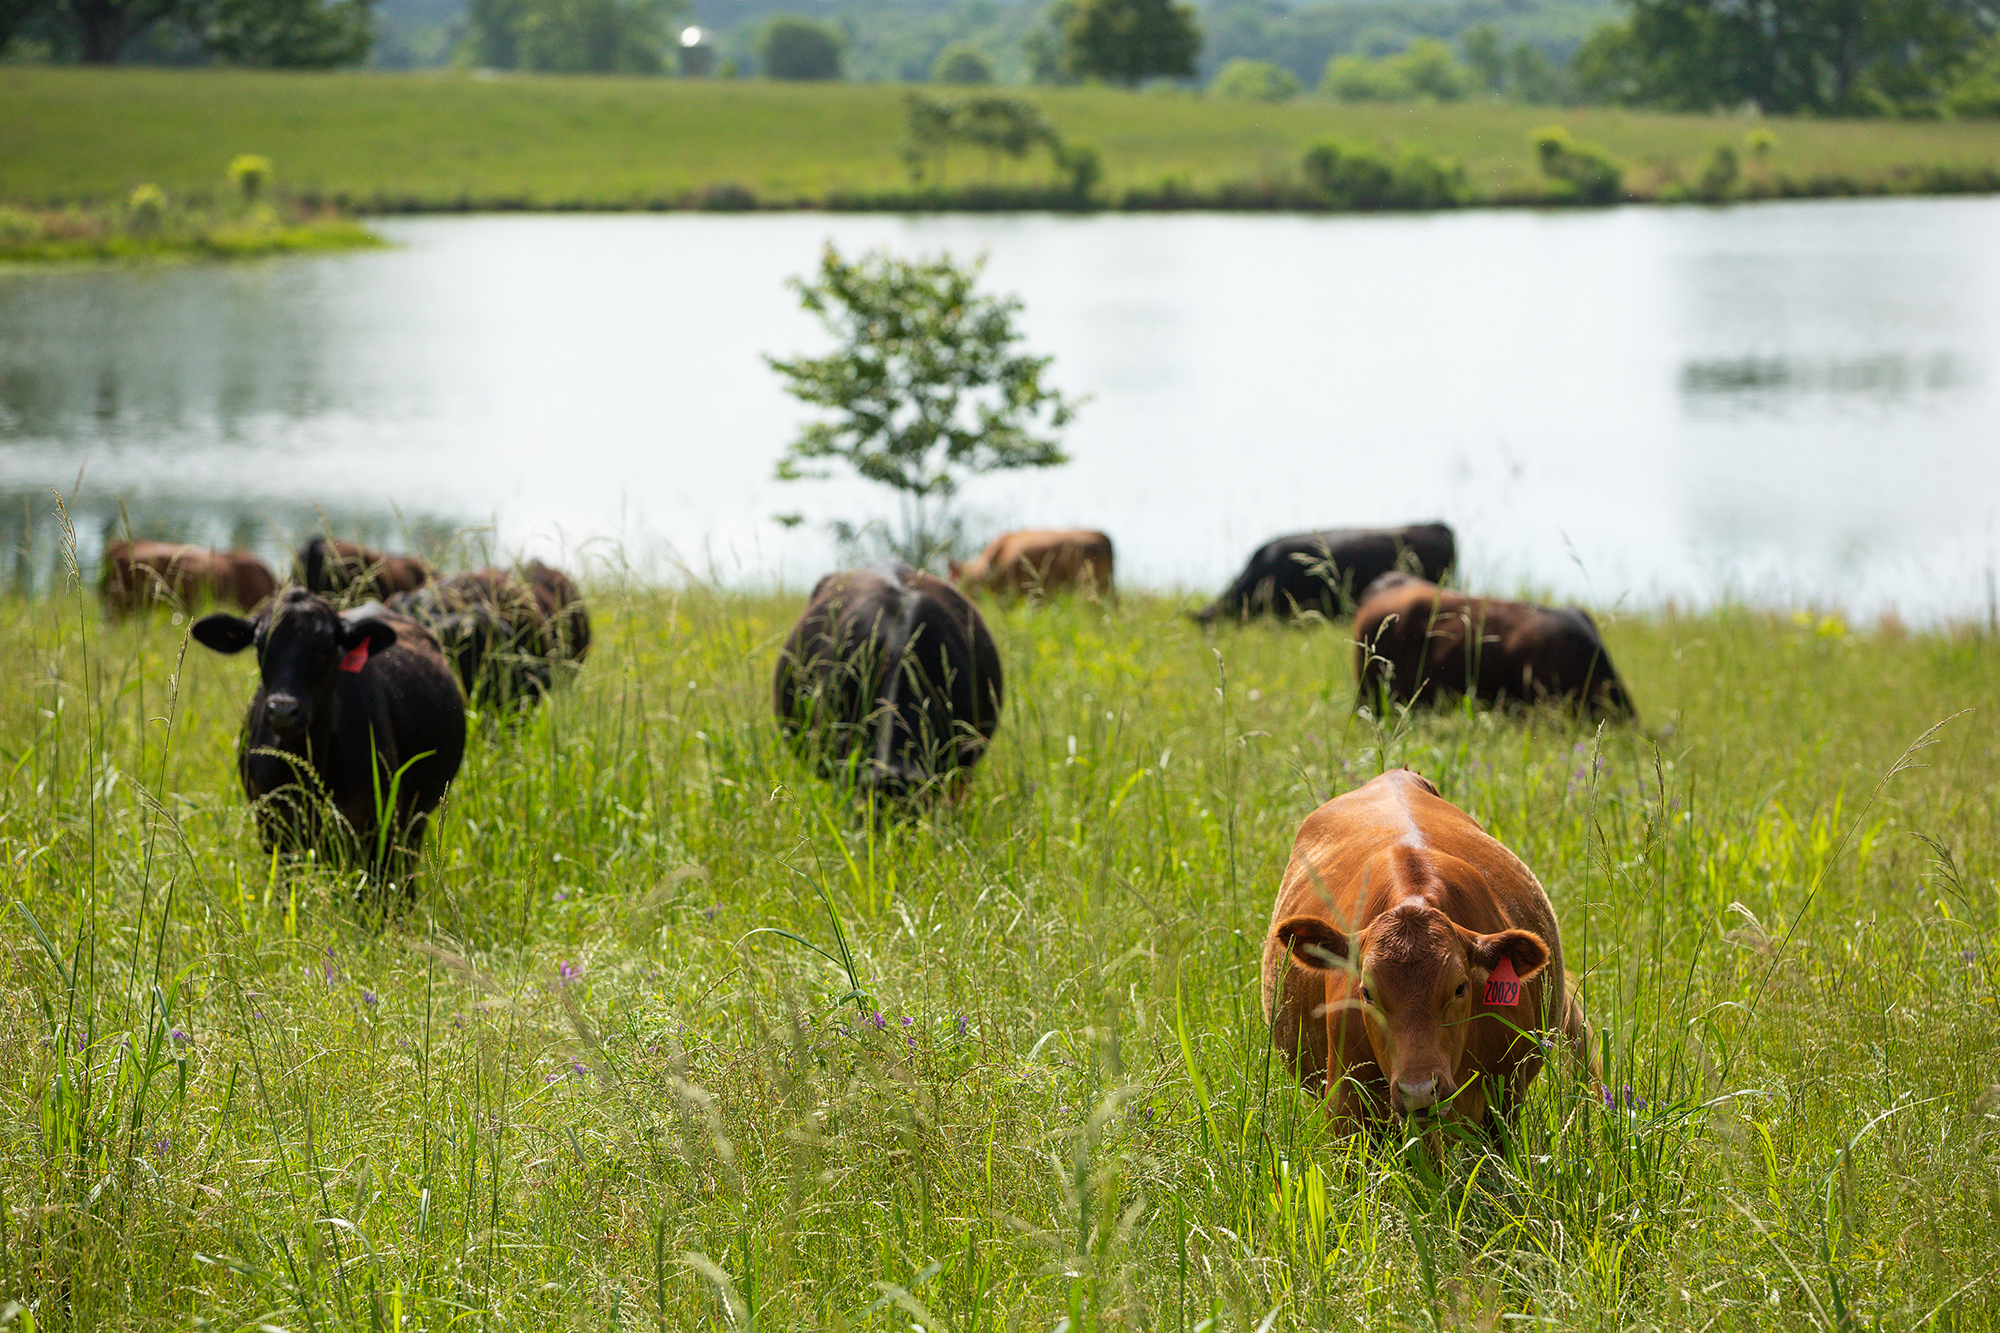 cattle in pasture